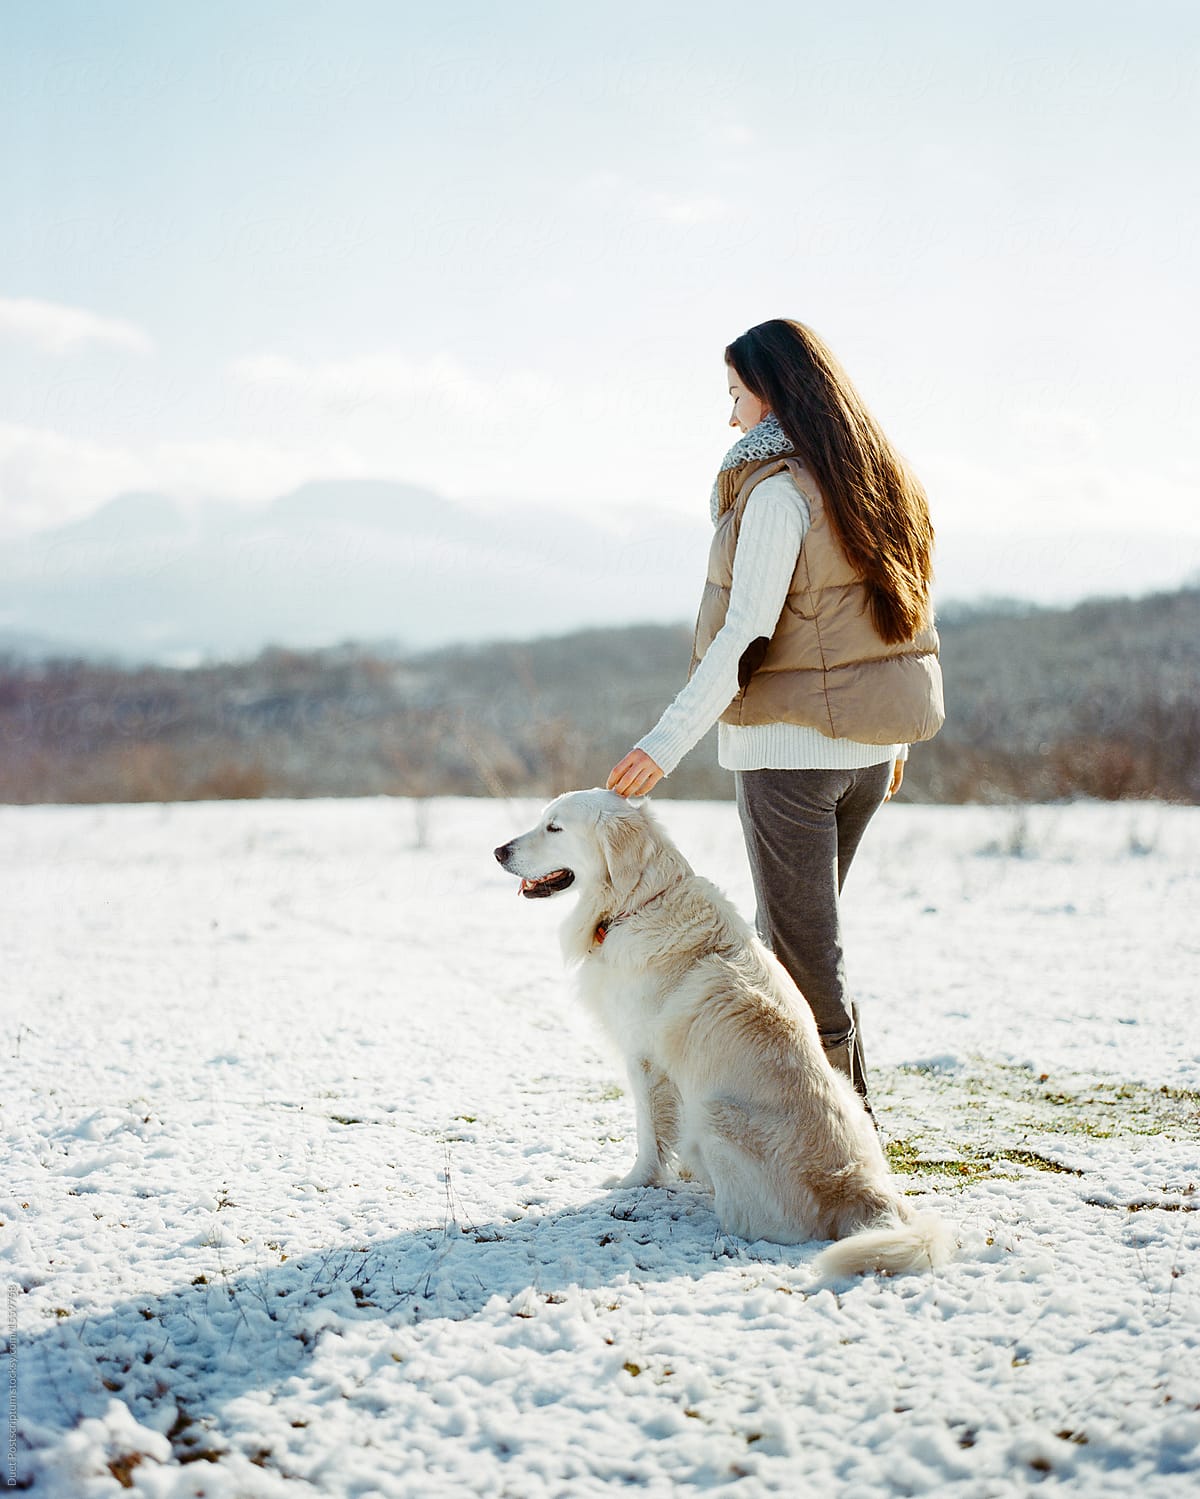 Woman stroking dog on snowy field